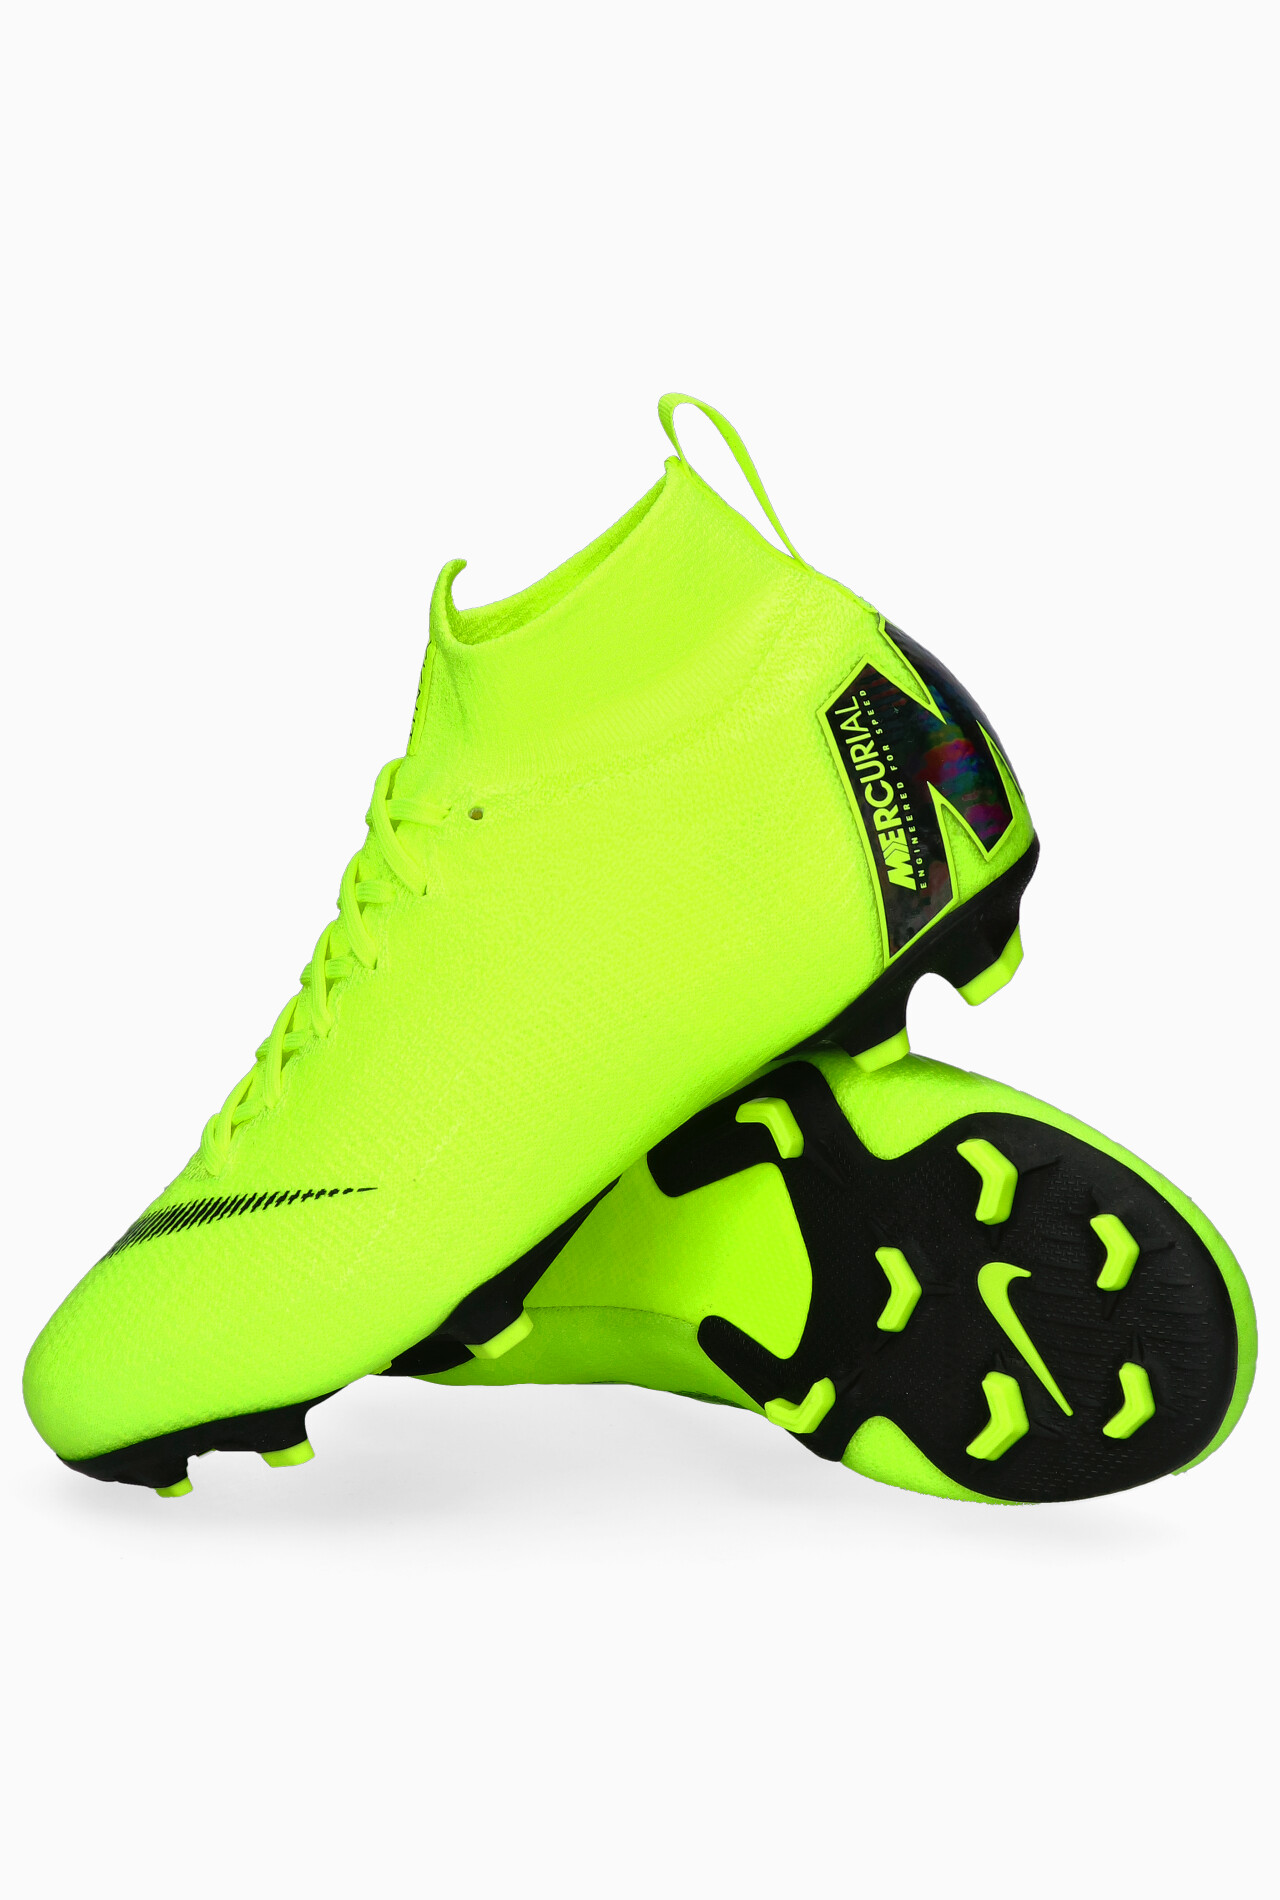 Nike Mercurial Superfly 6 Elite Fg Junior R Gol Com Football Boots Equipment